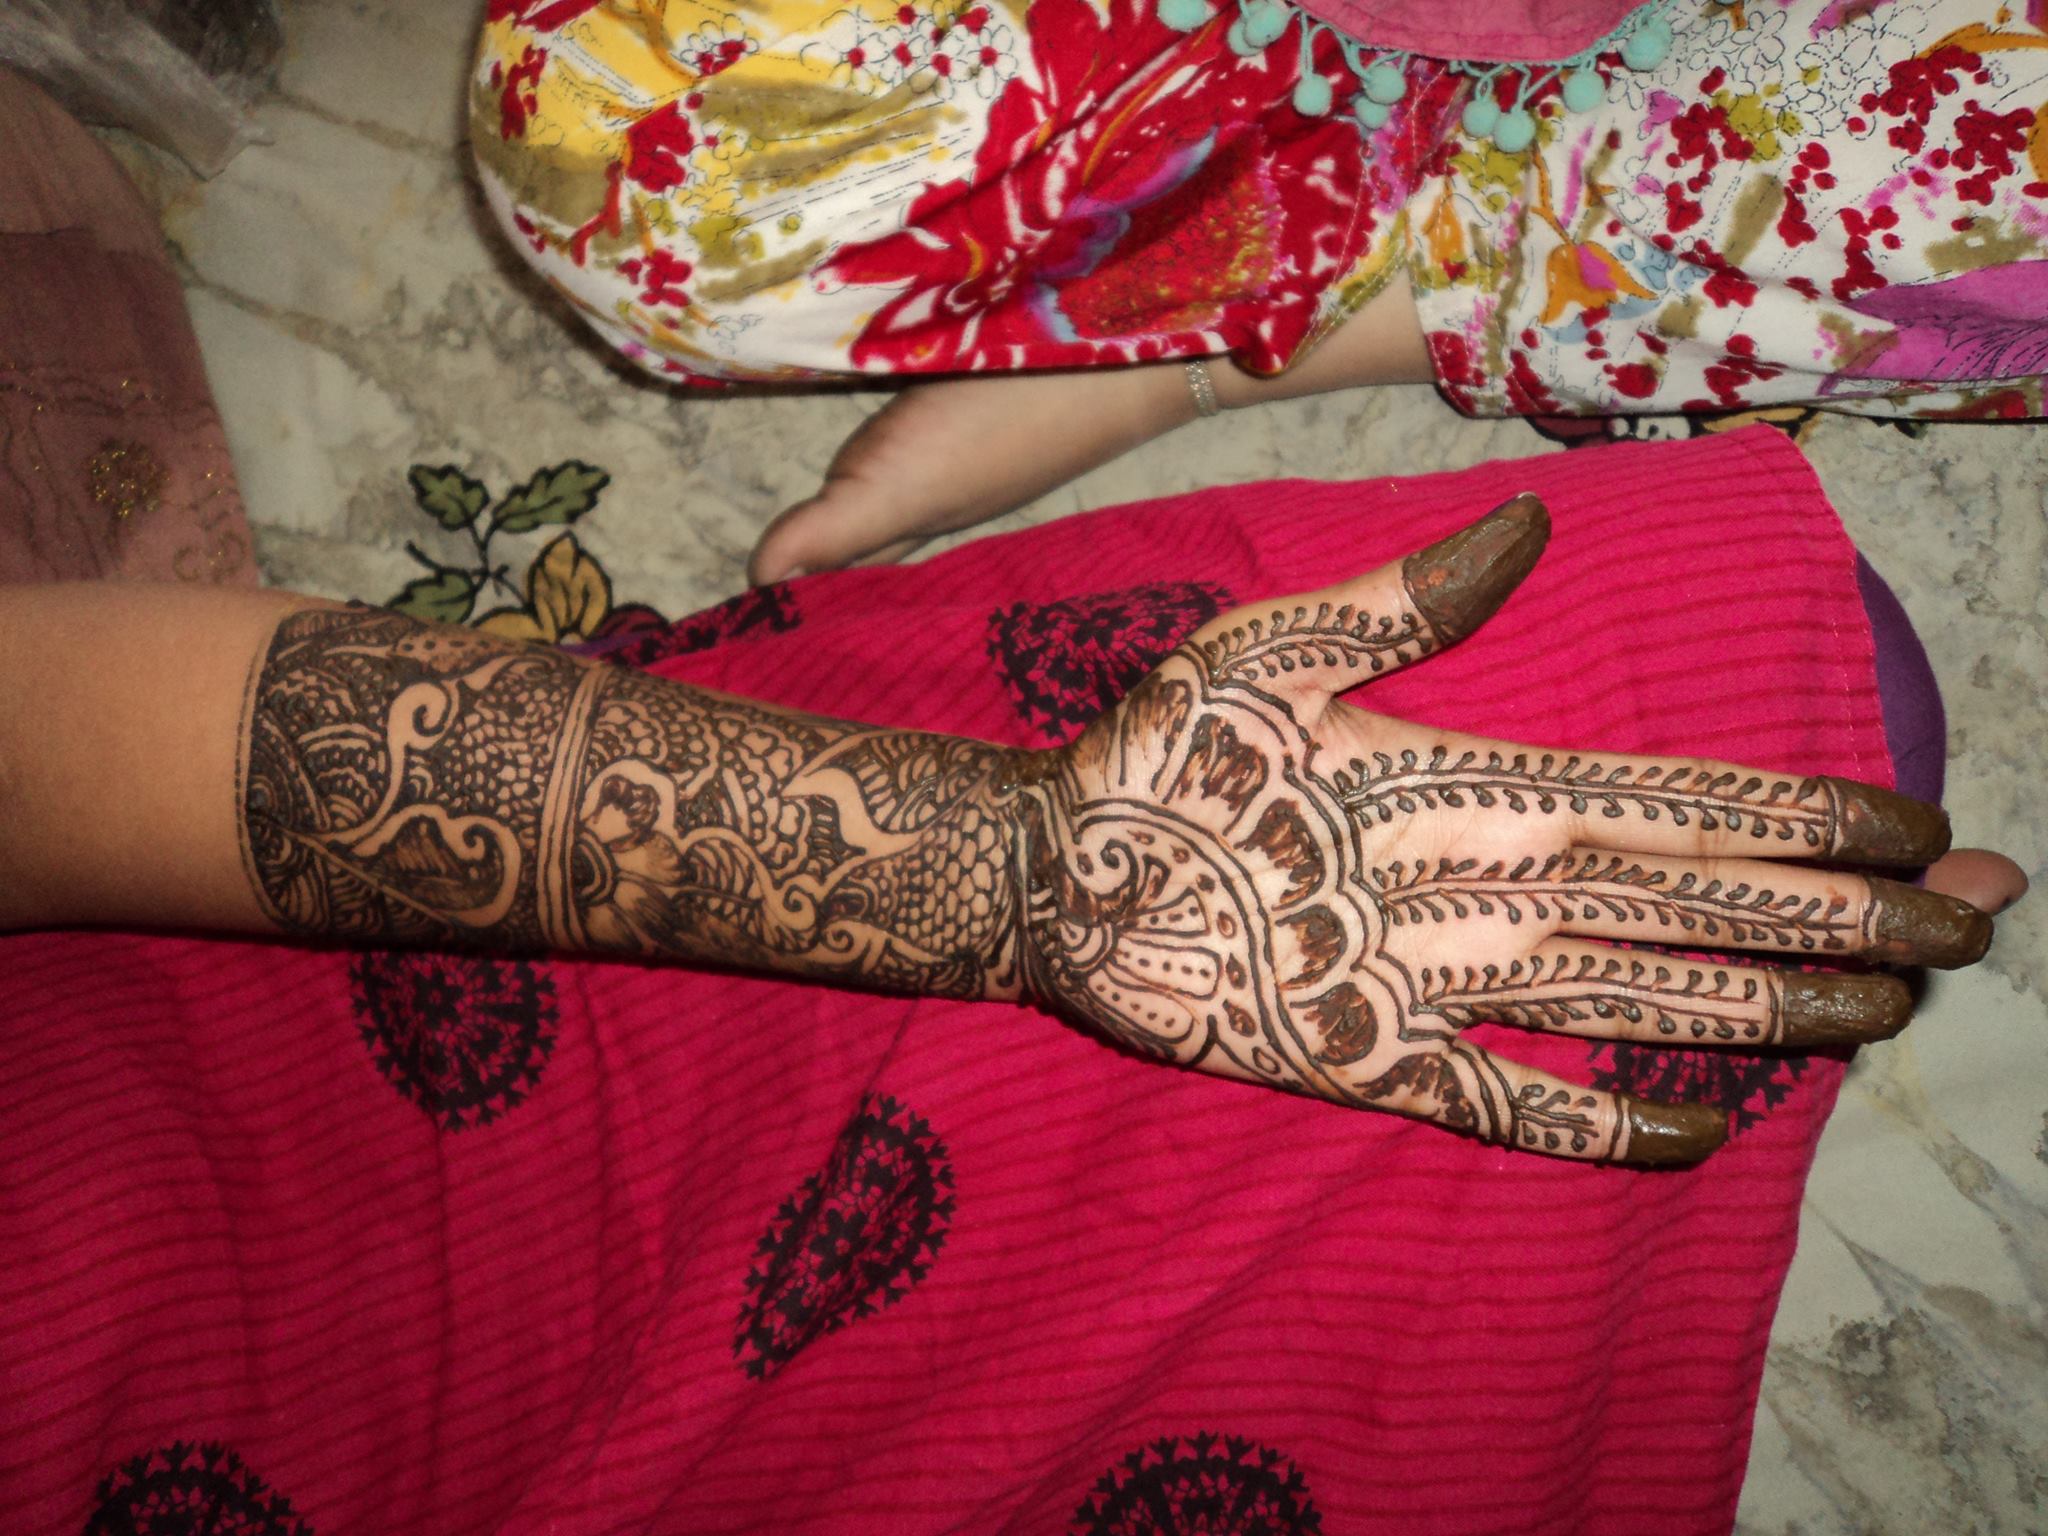  Beautiful henna tattoo! 